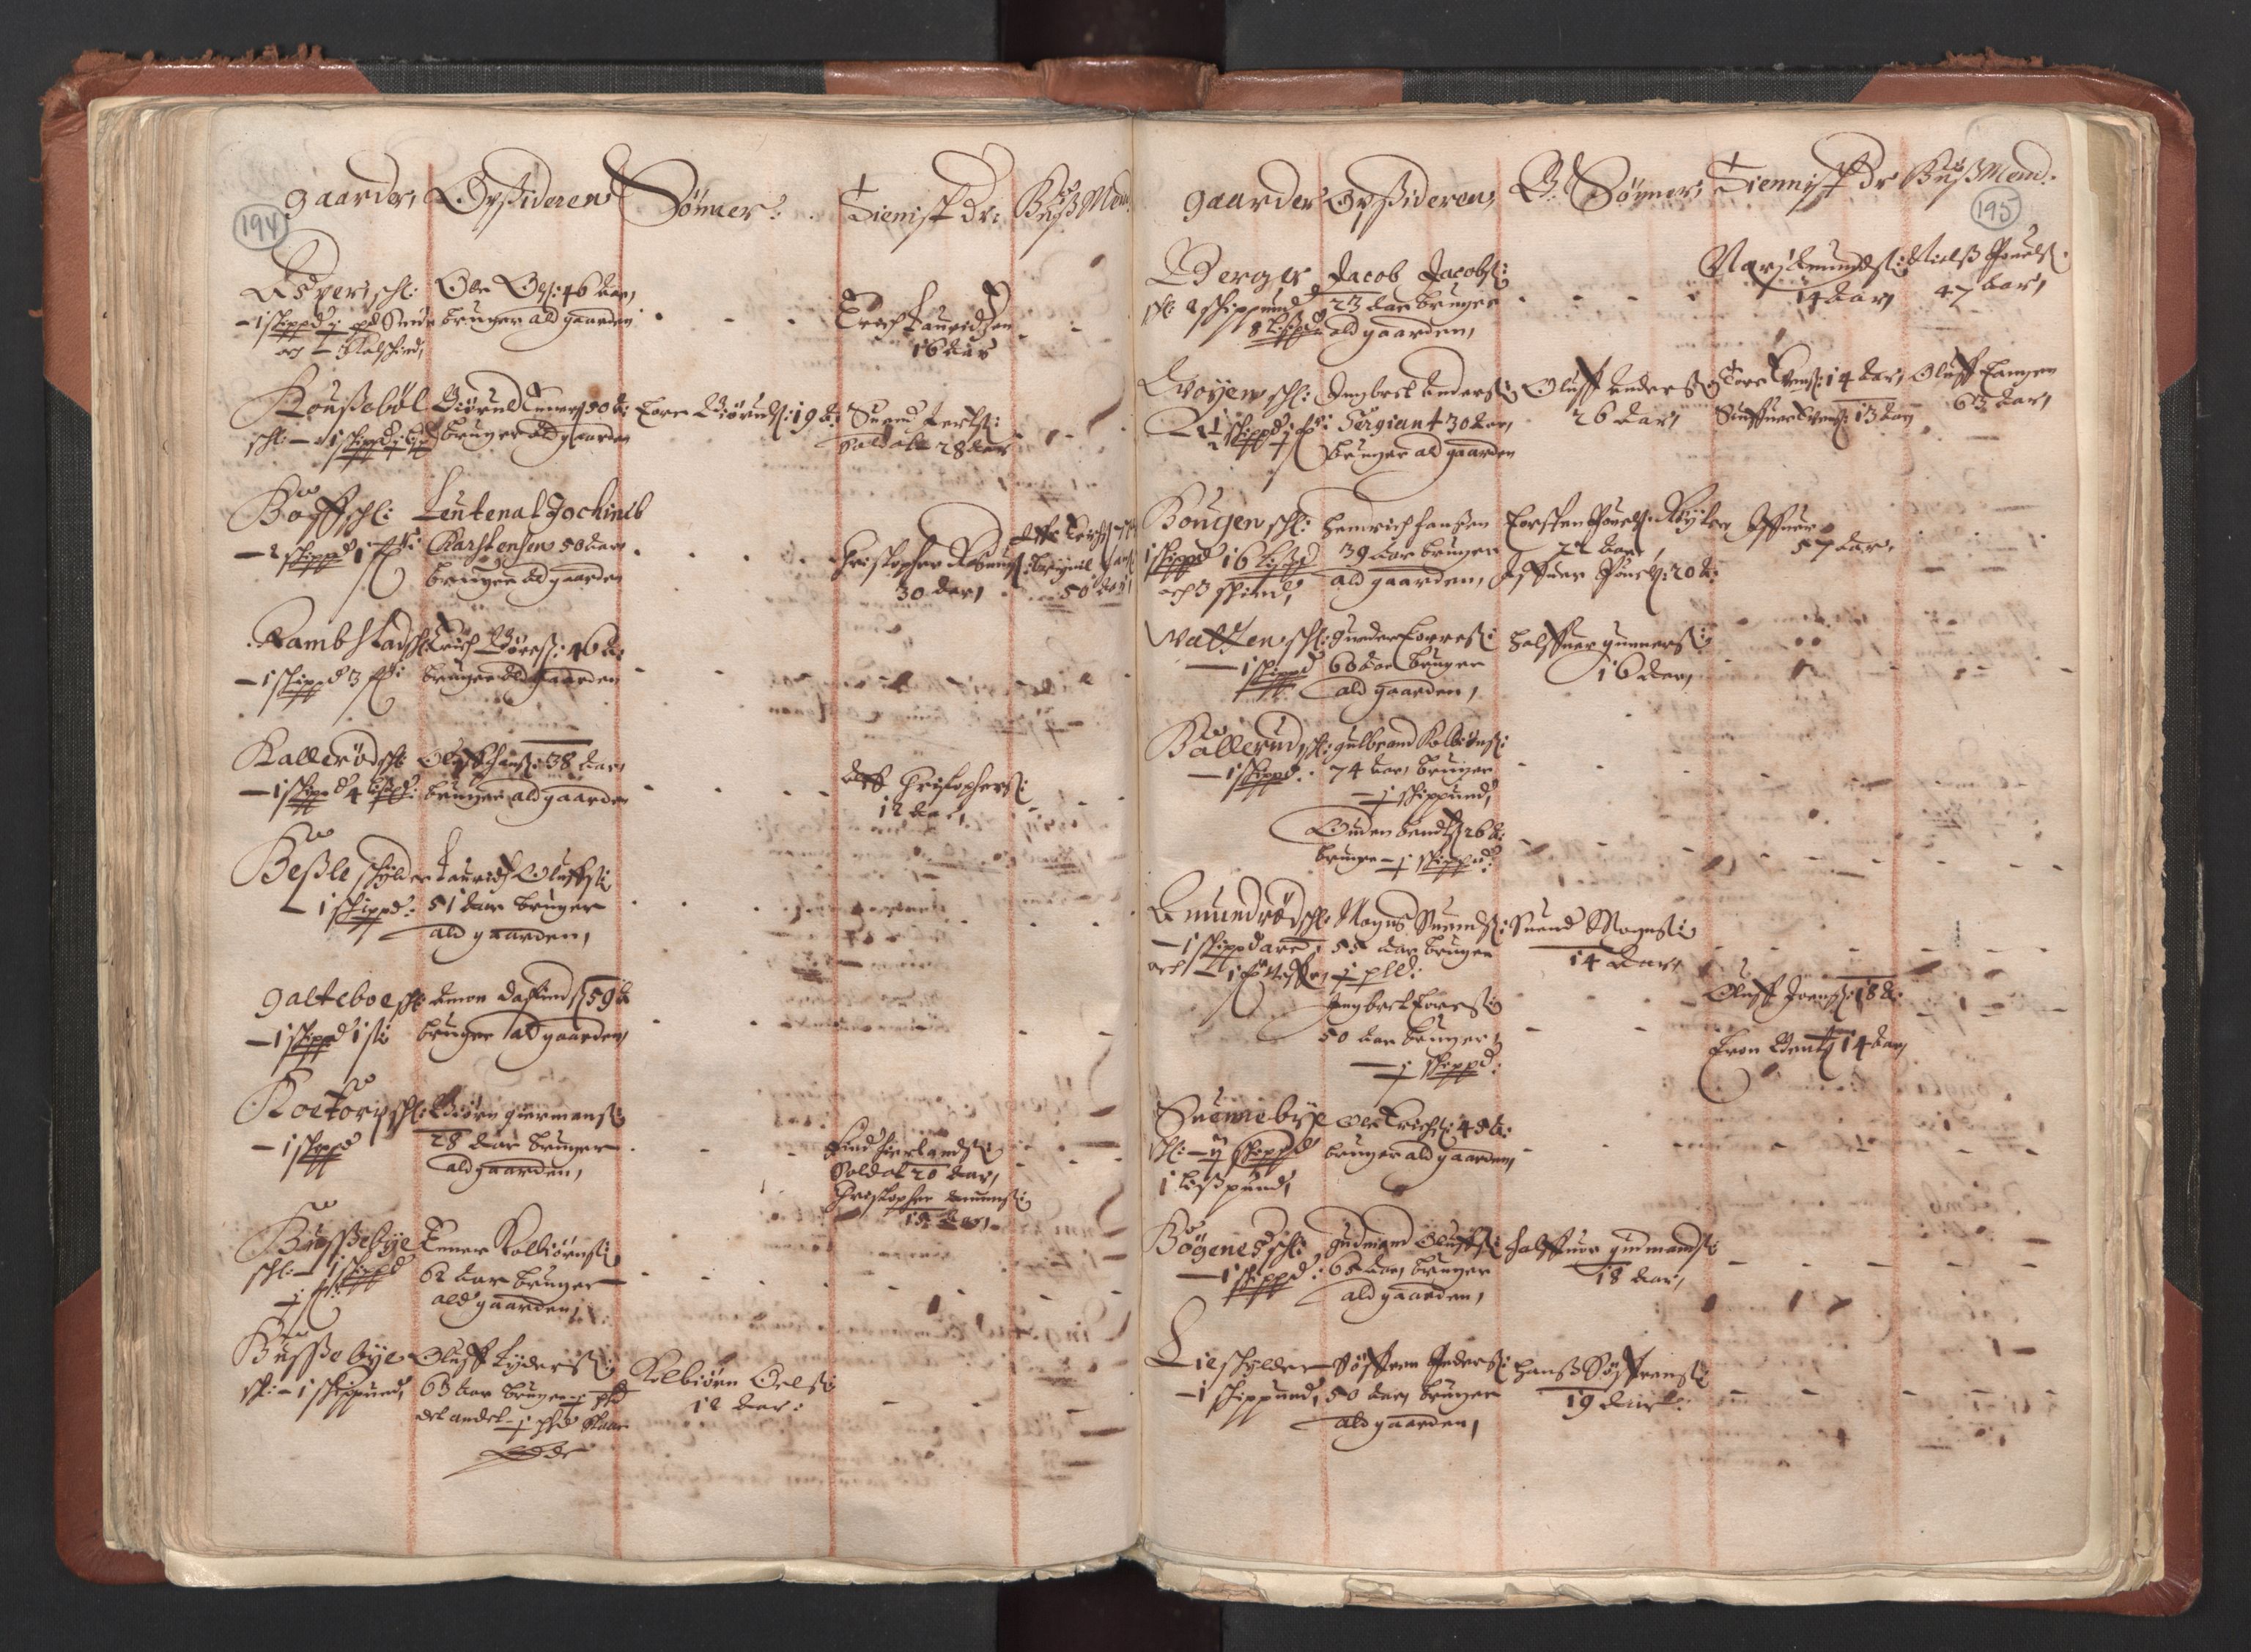 RA, Fogdenes og sorenskrivernes manntall 1664-1666, nr. 1: Fogderier (len og skipreider) i nåværende Østfold fylke, 1664, s. 194-195